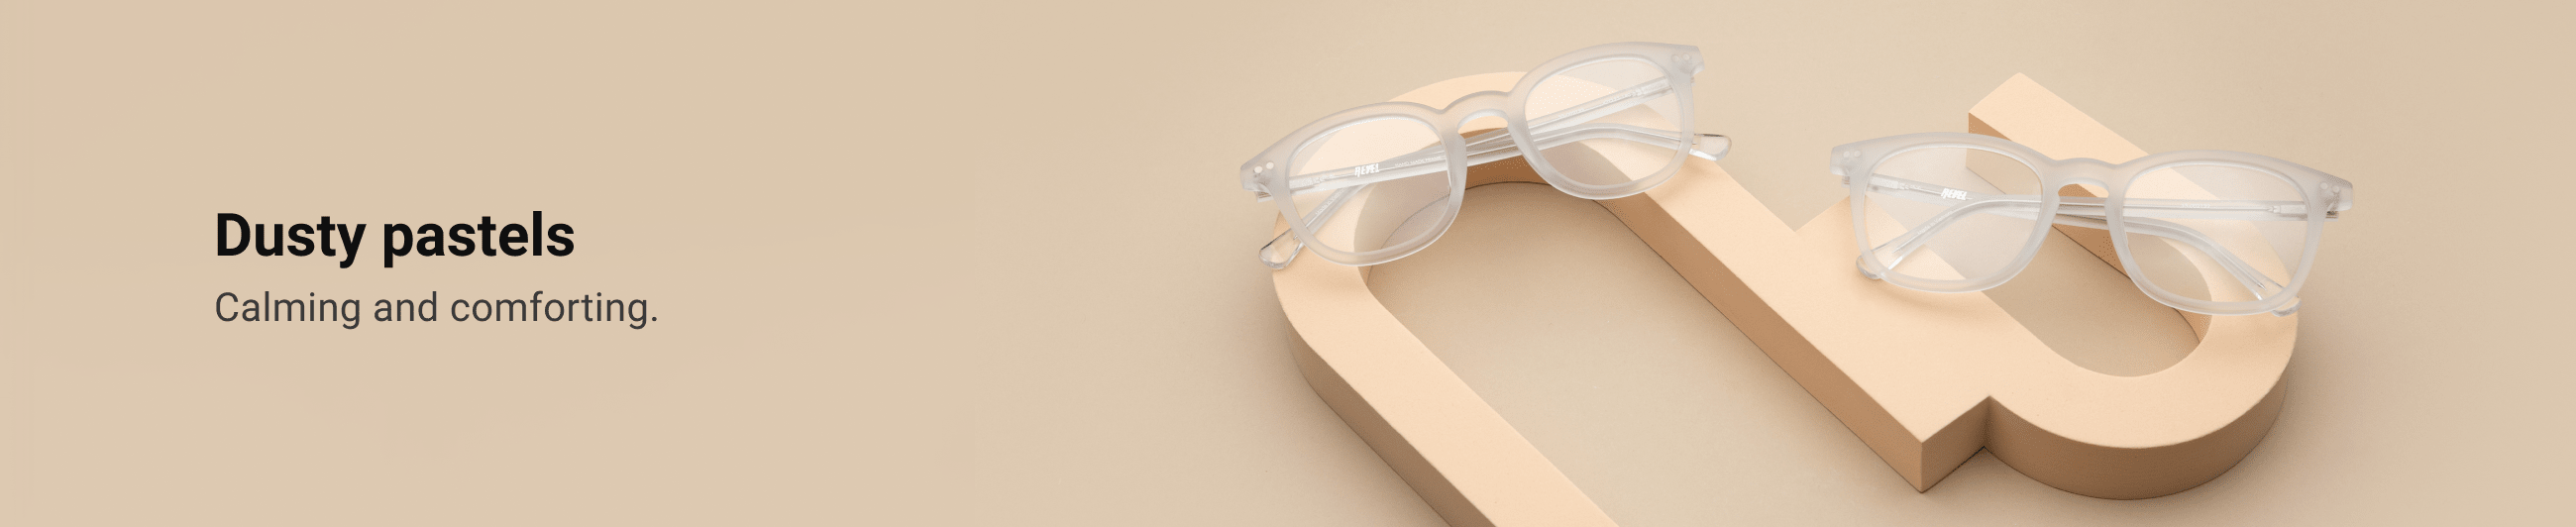 dusty pastel glasses